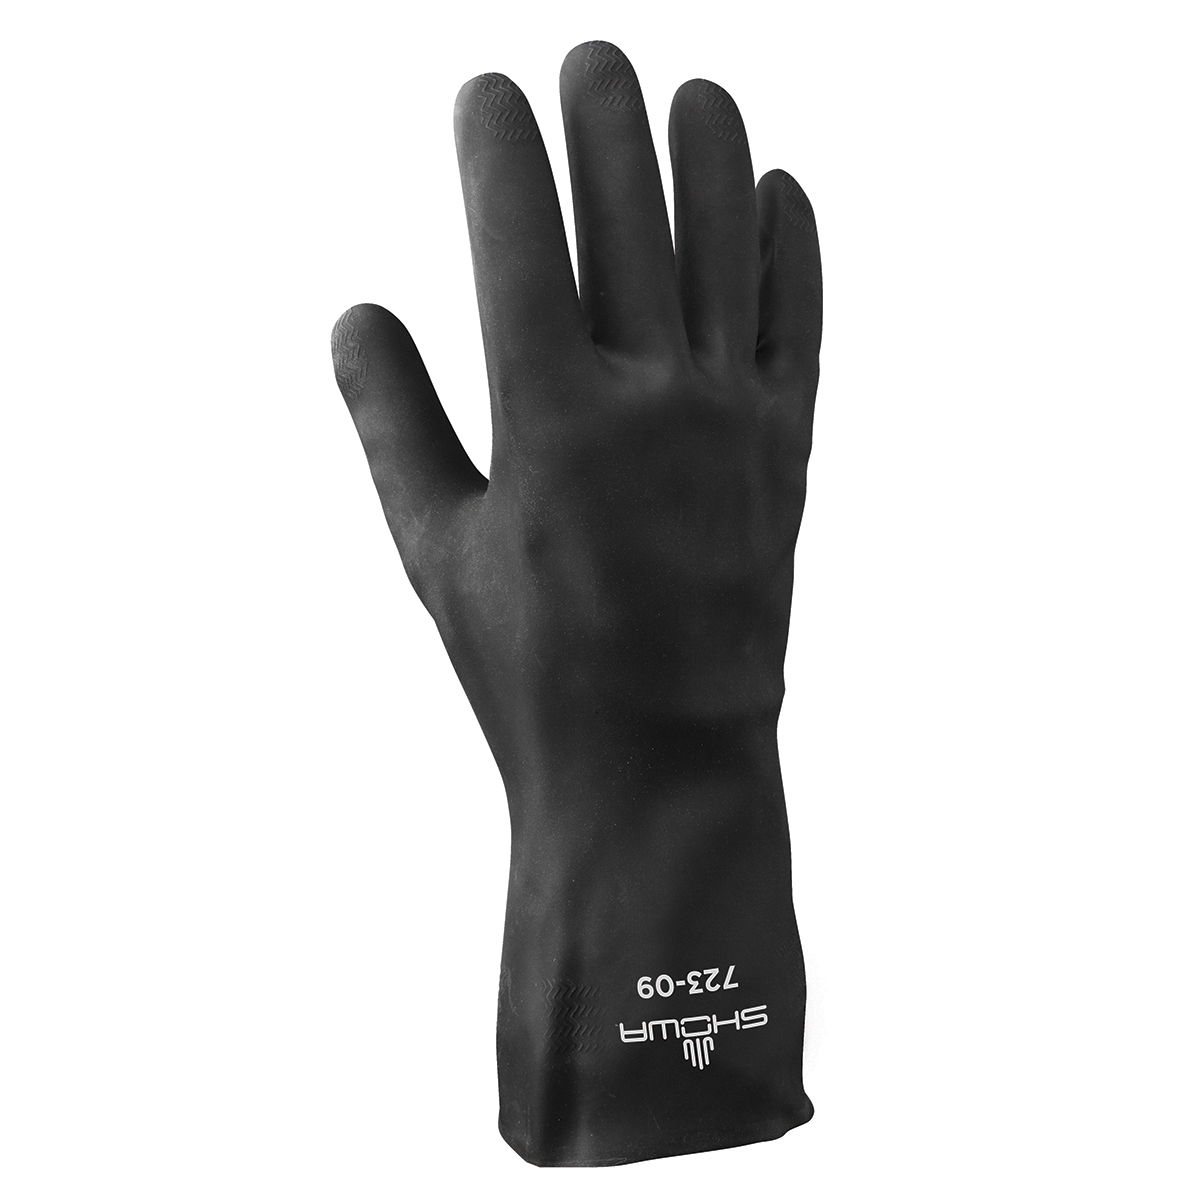 SHOWA® Black Cotton Flock Lined 24 mil Neoprene Chemical Resistant Gloves